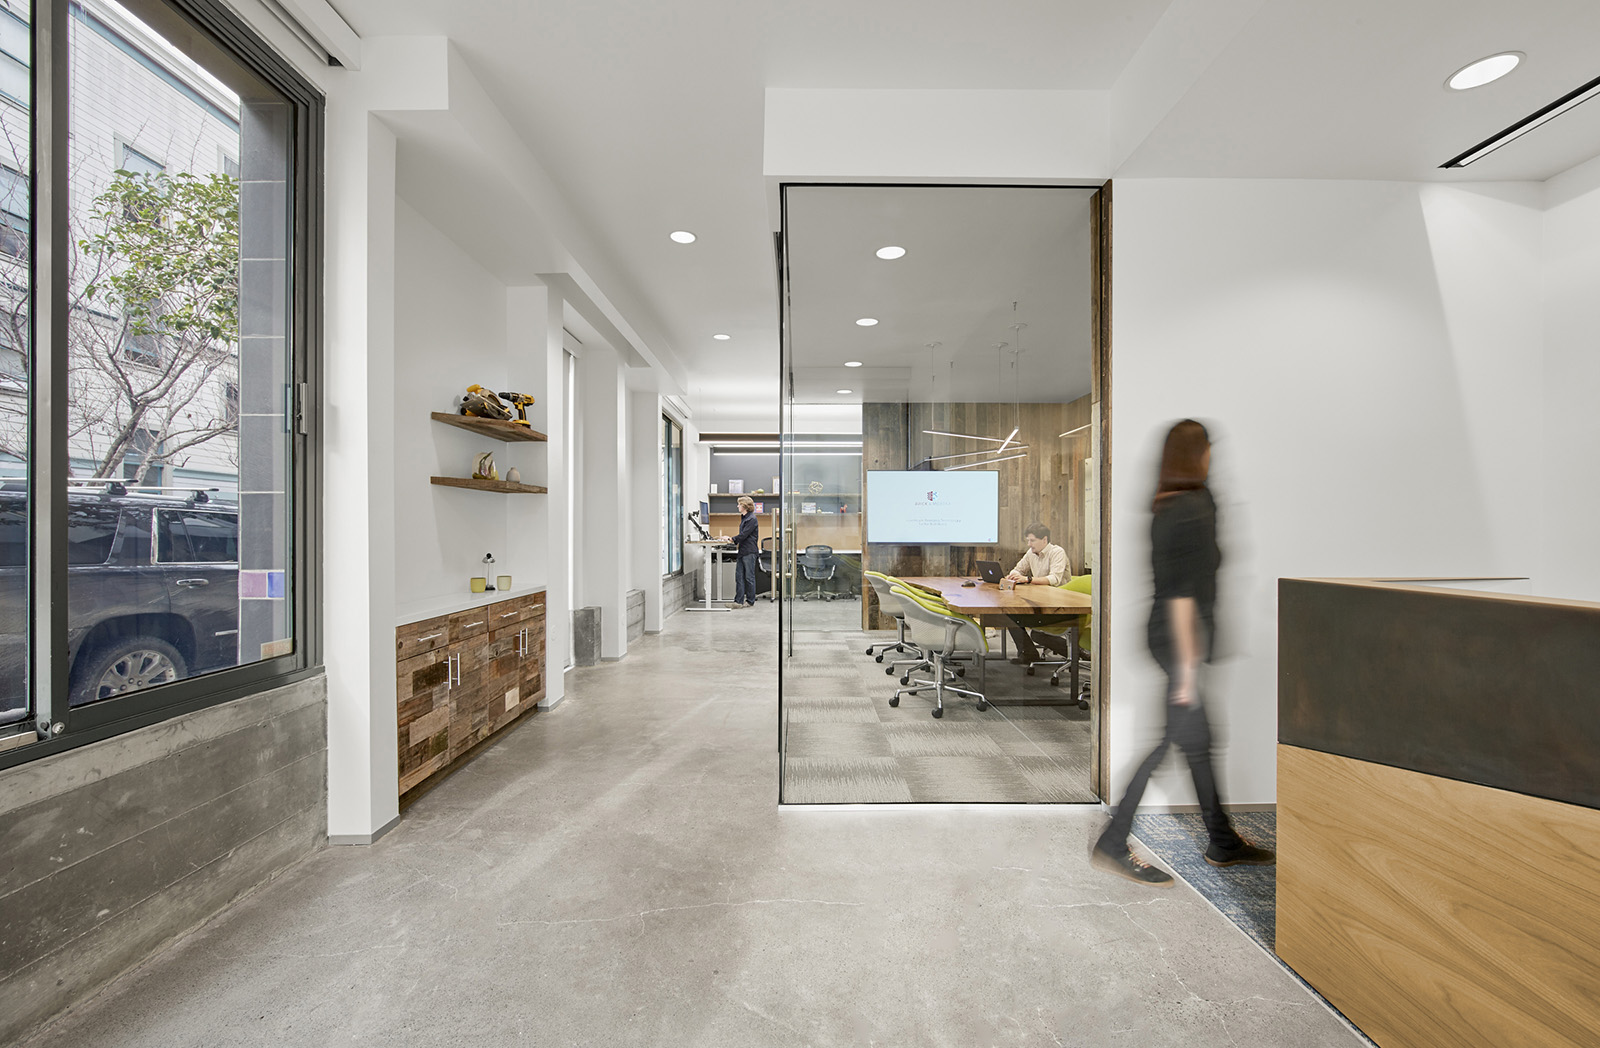 A Tour of Brick & Mortar Ventures’ Cool San Francisco Office